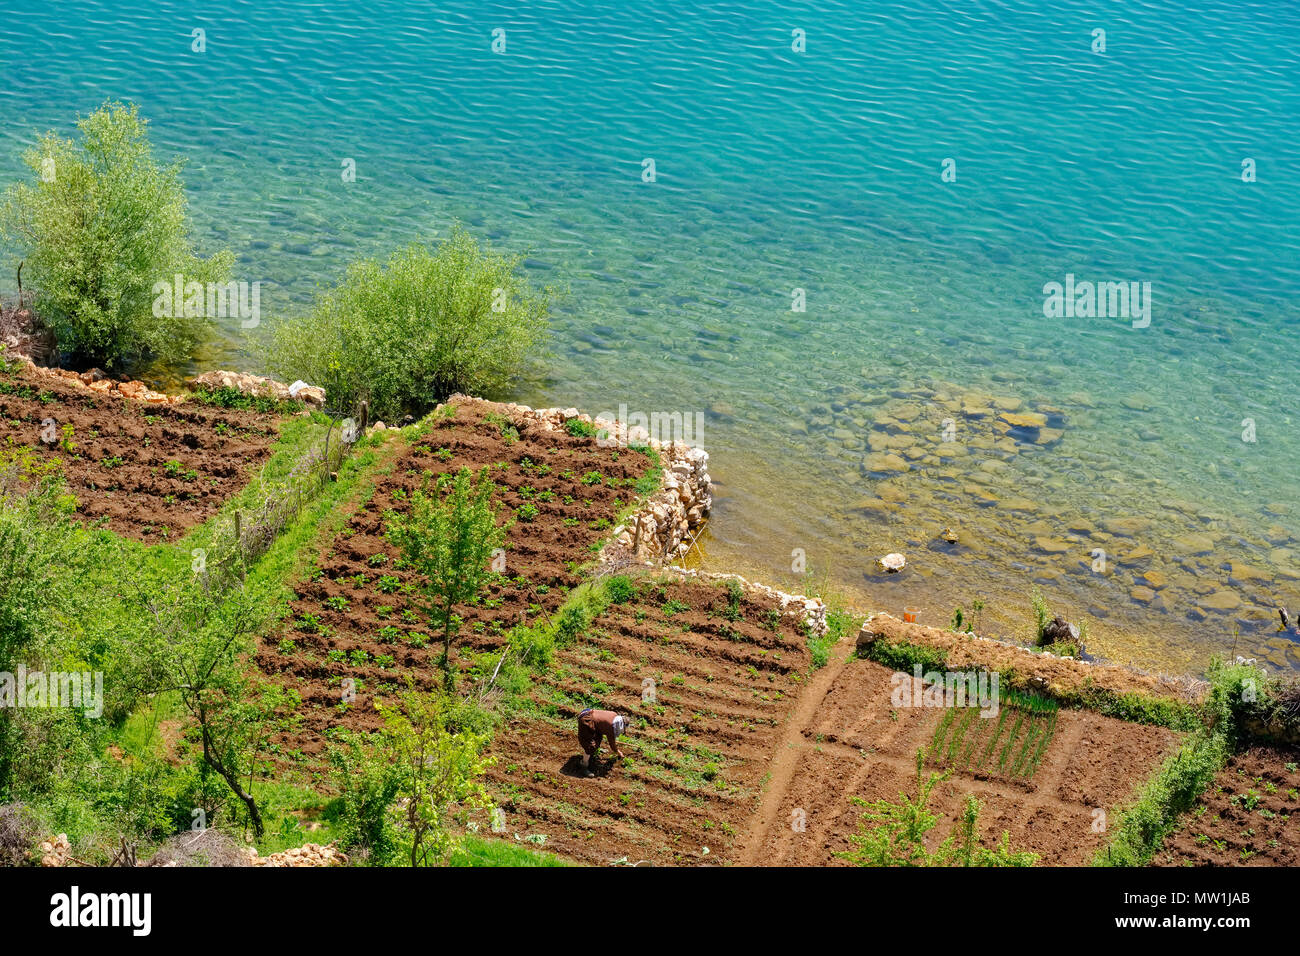 Small cultivated fields on the lake shore, agriculture, Lake Ohrid near Lin, Korca region, Albania Stock Photo